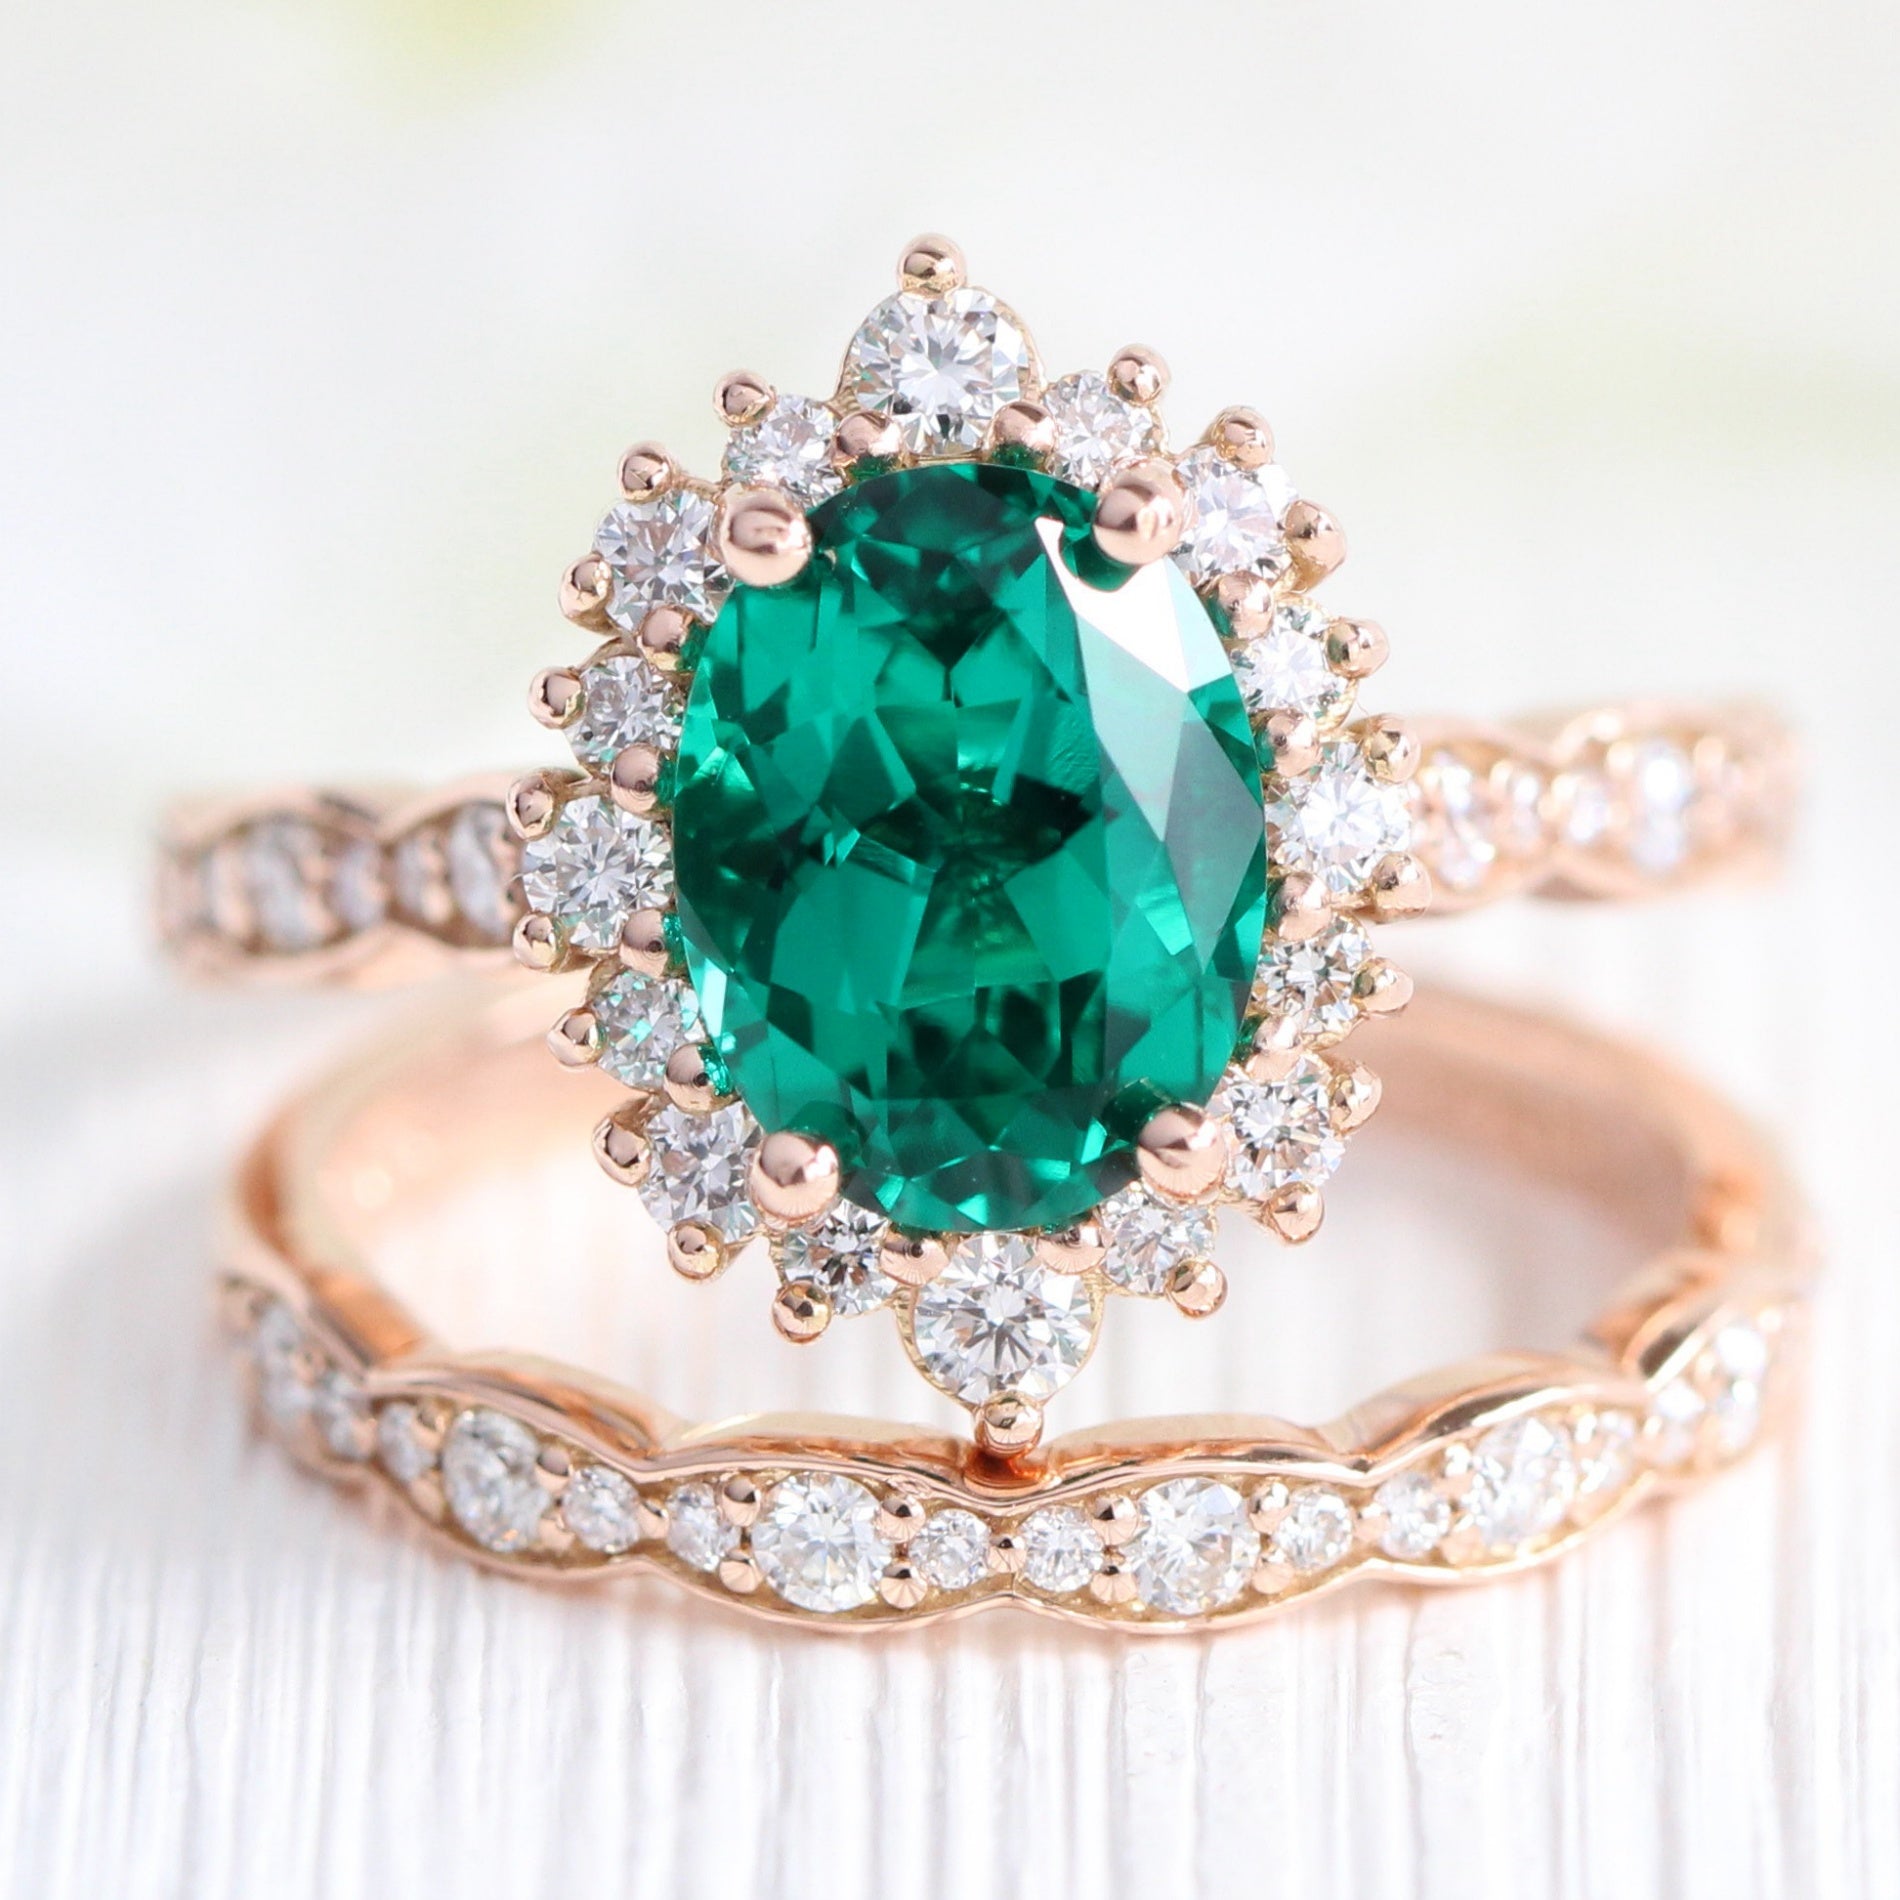 Halo diamond oval emerald ring stock rose gold half eternity wedding band la more design jewelry